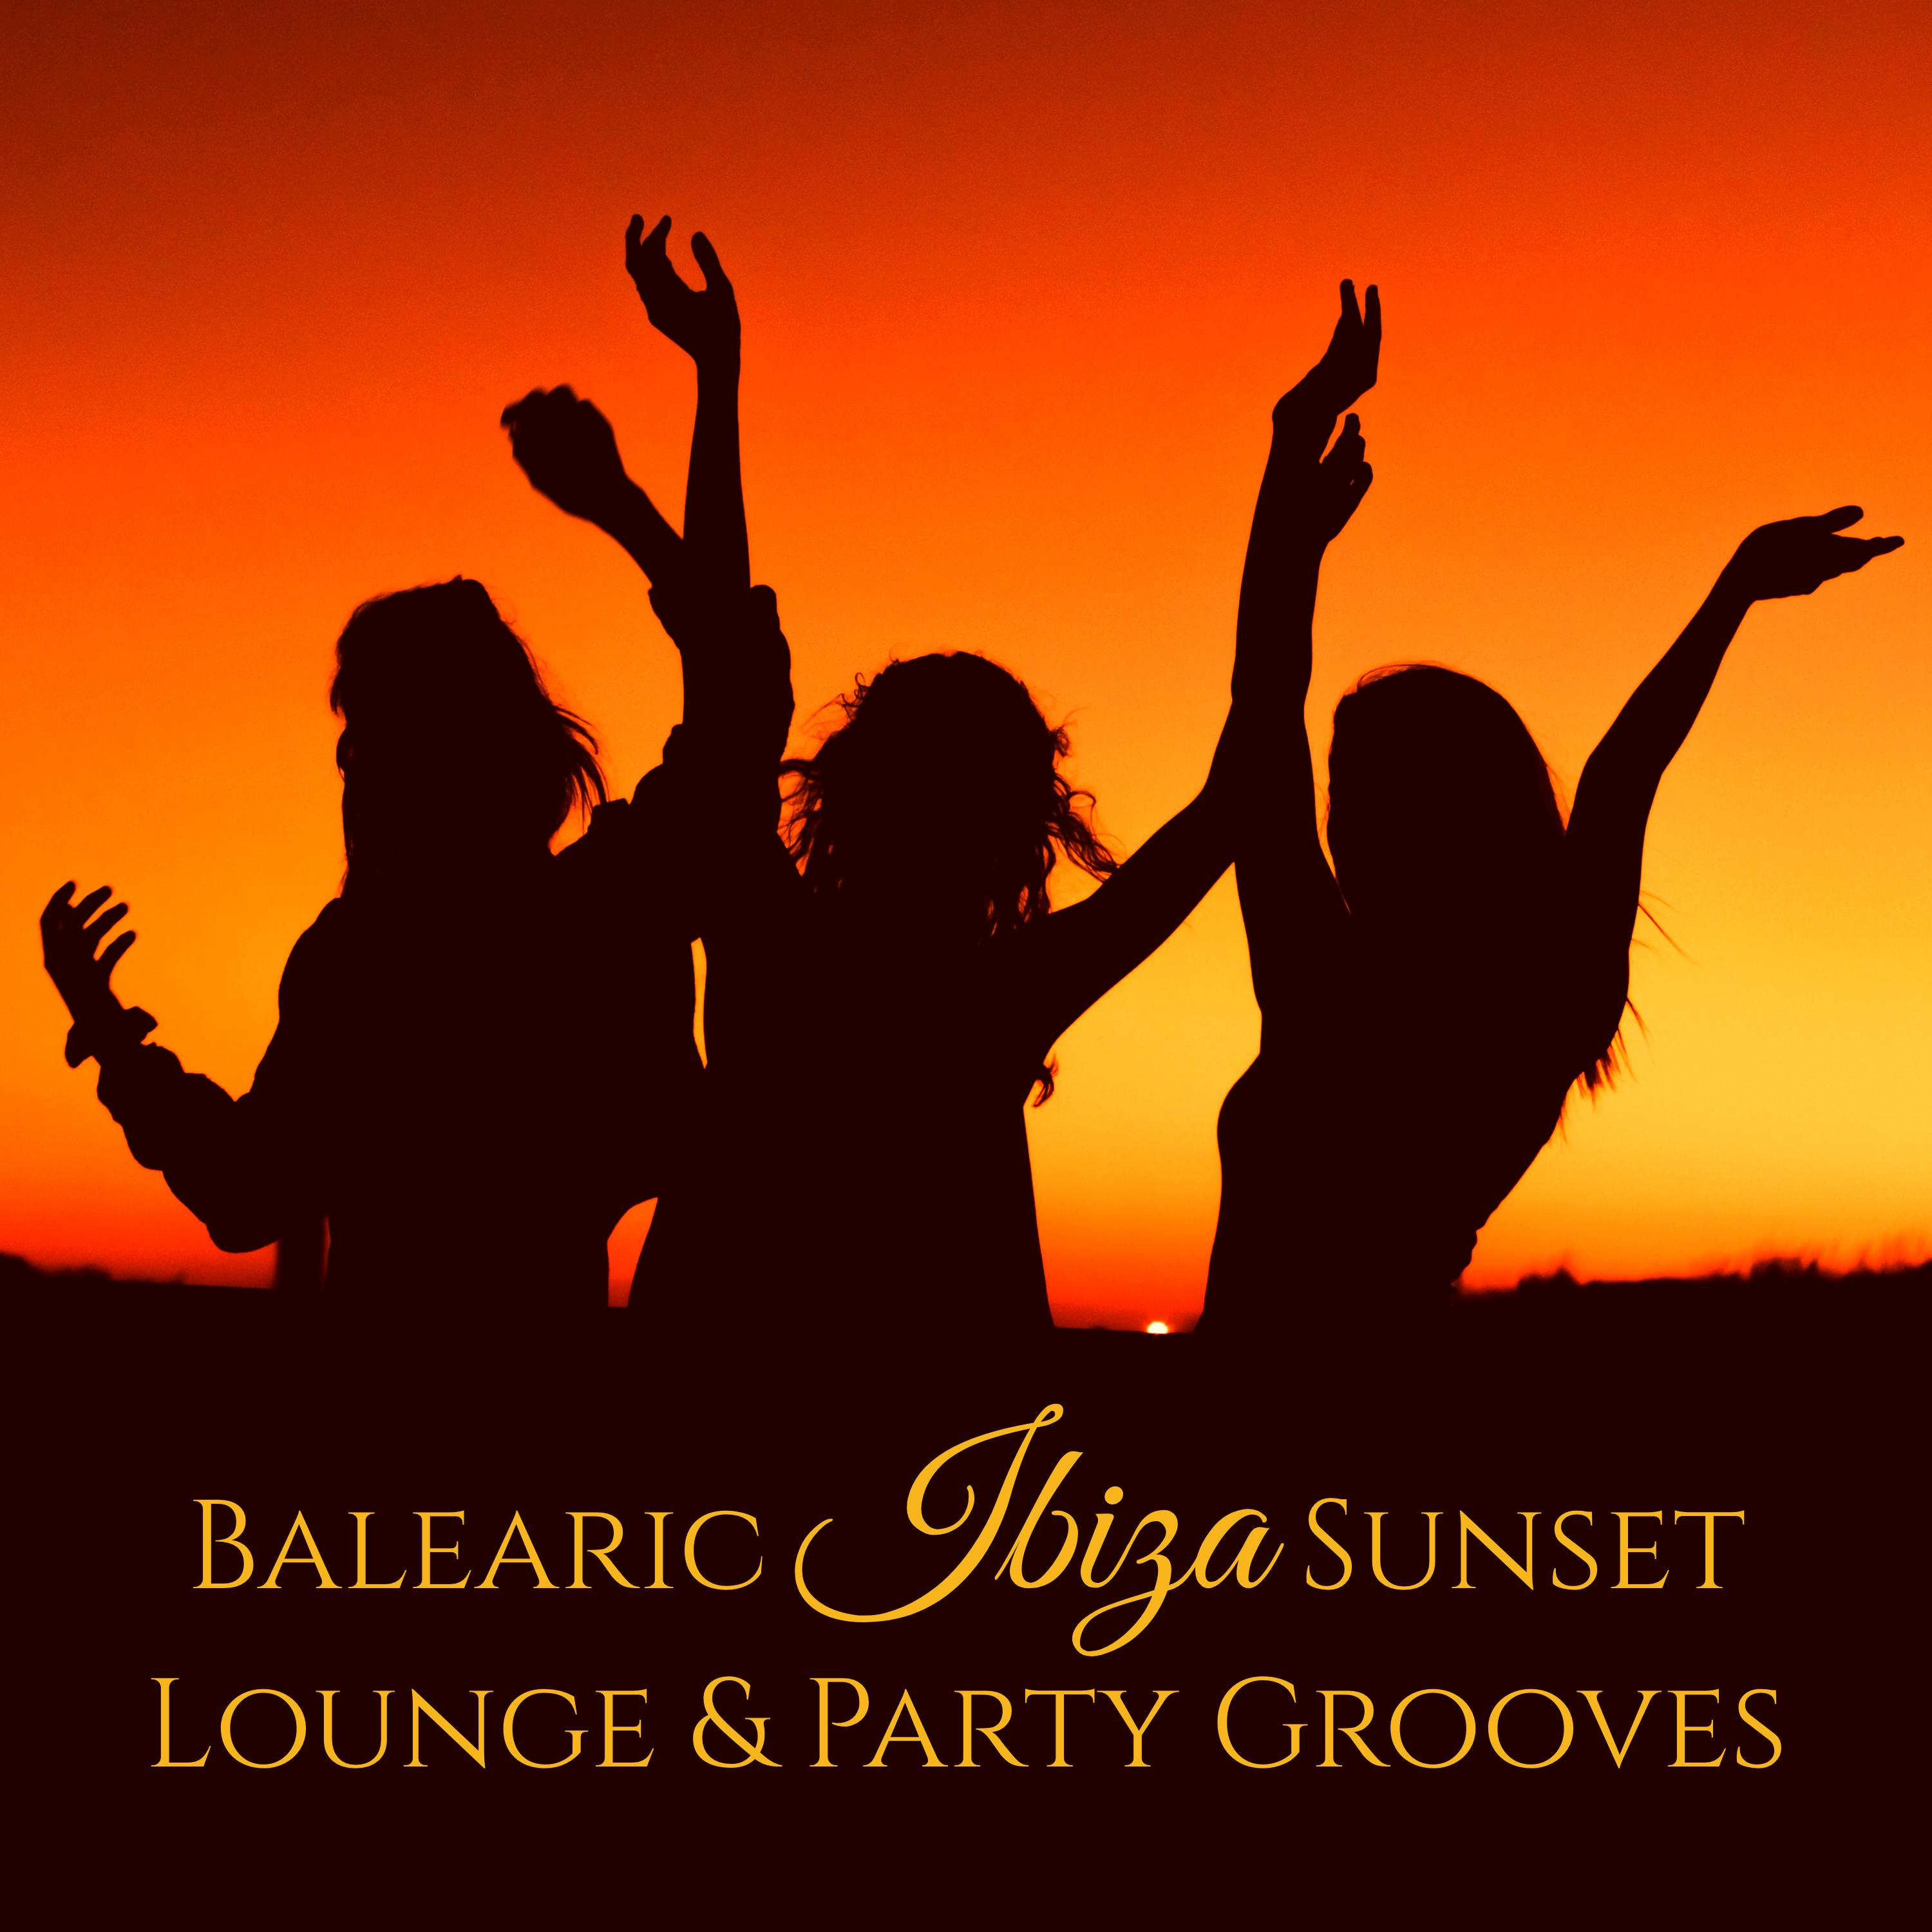 Balearic Ibiza Sunset Lounge & Party Grooves